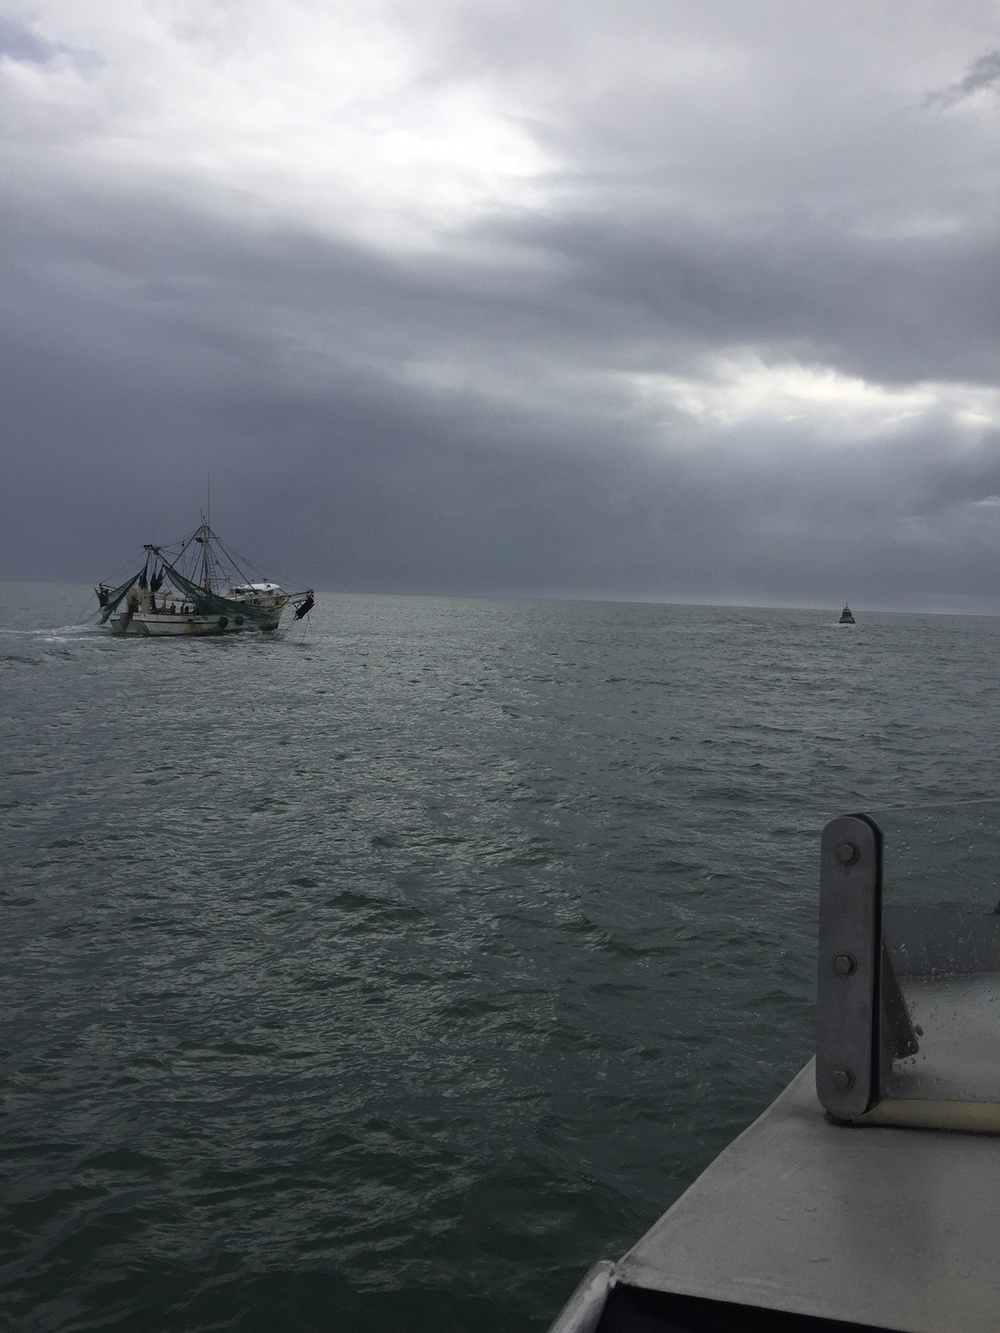 Coast Guard, good Samaritan assist 3 aboard sinking fishing vessel 20 miles NE of Oregon Inlet, NC